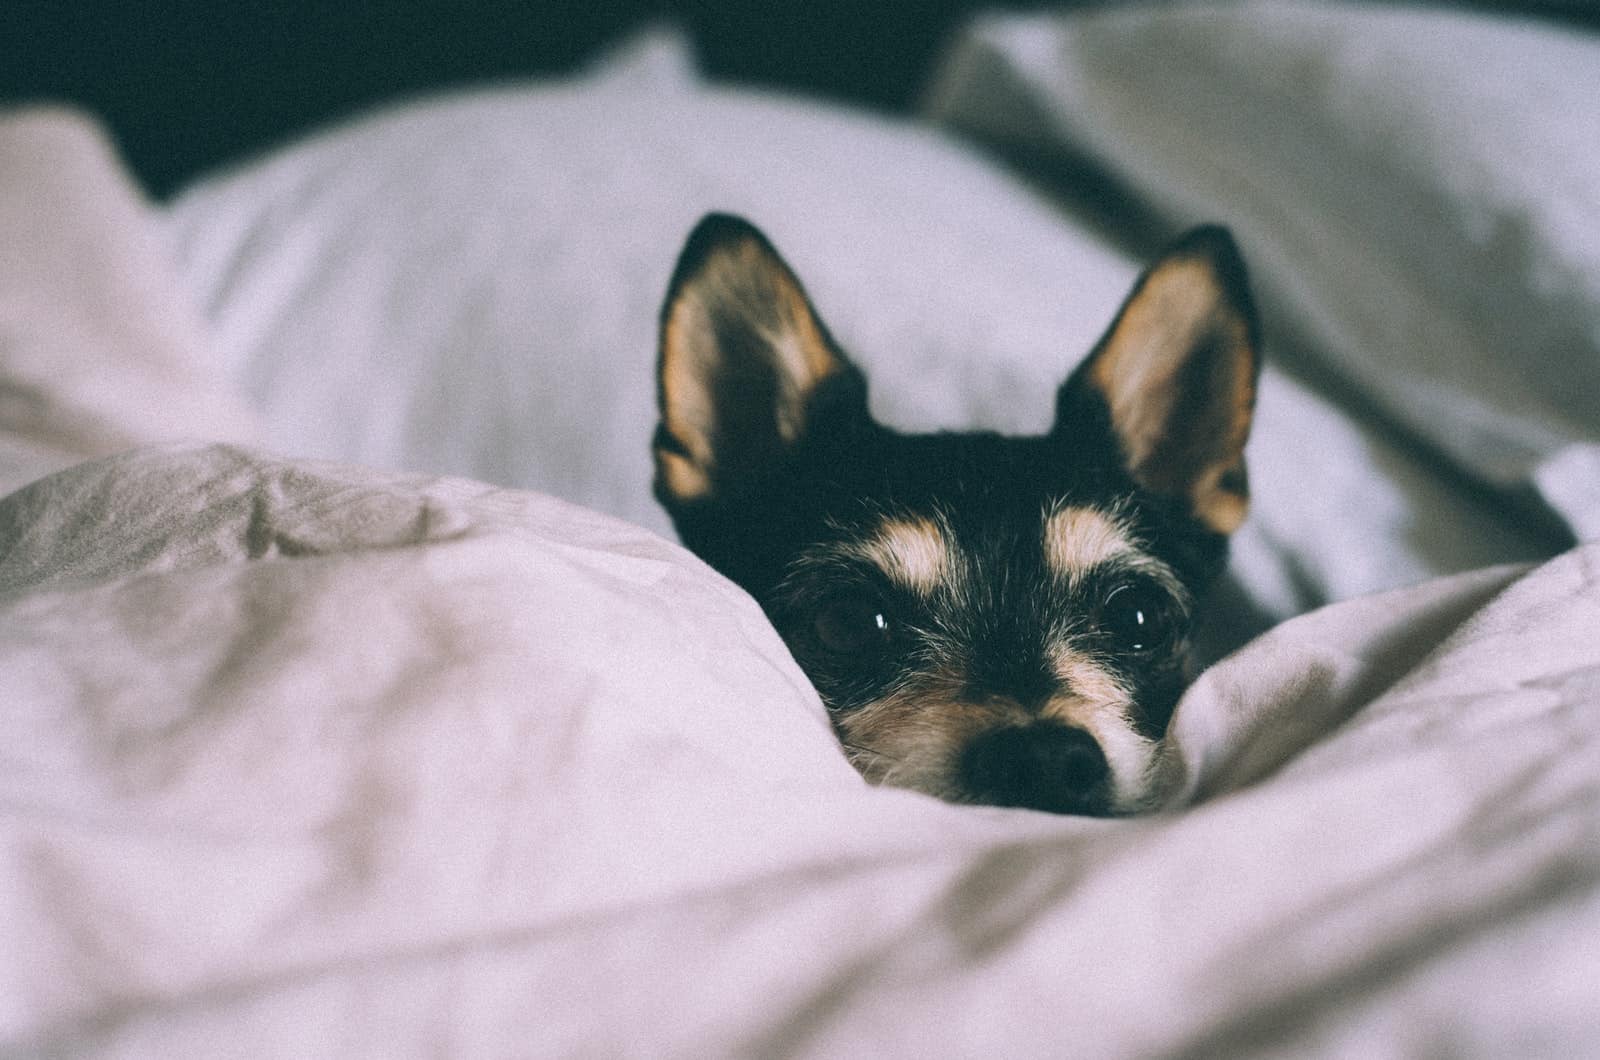 dog peeking through a blanket